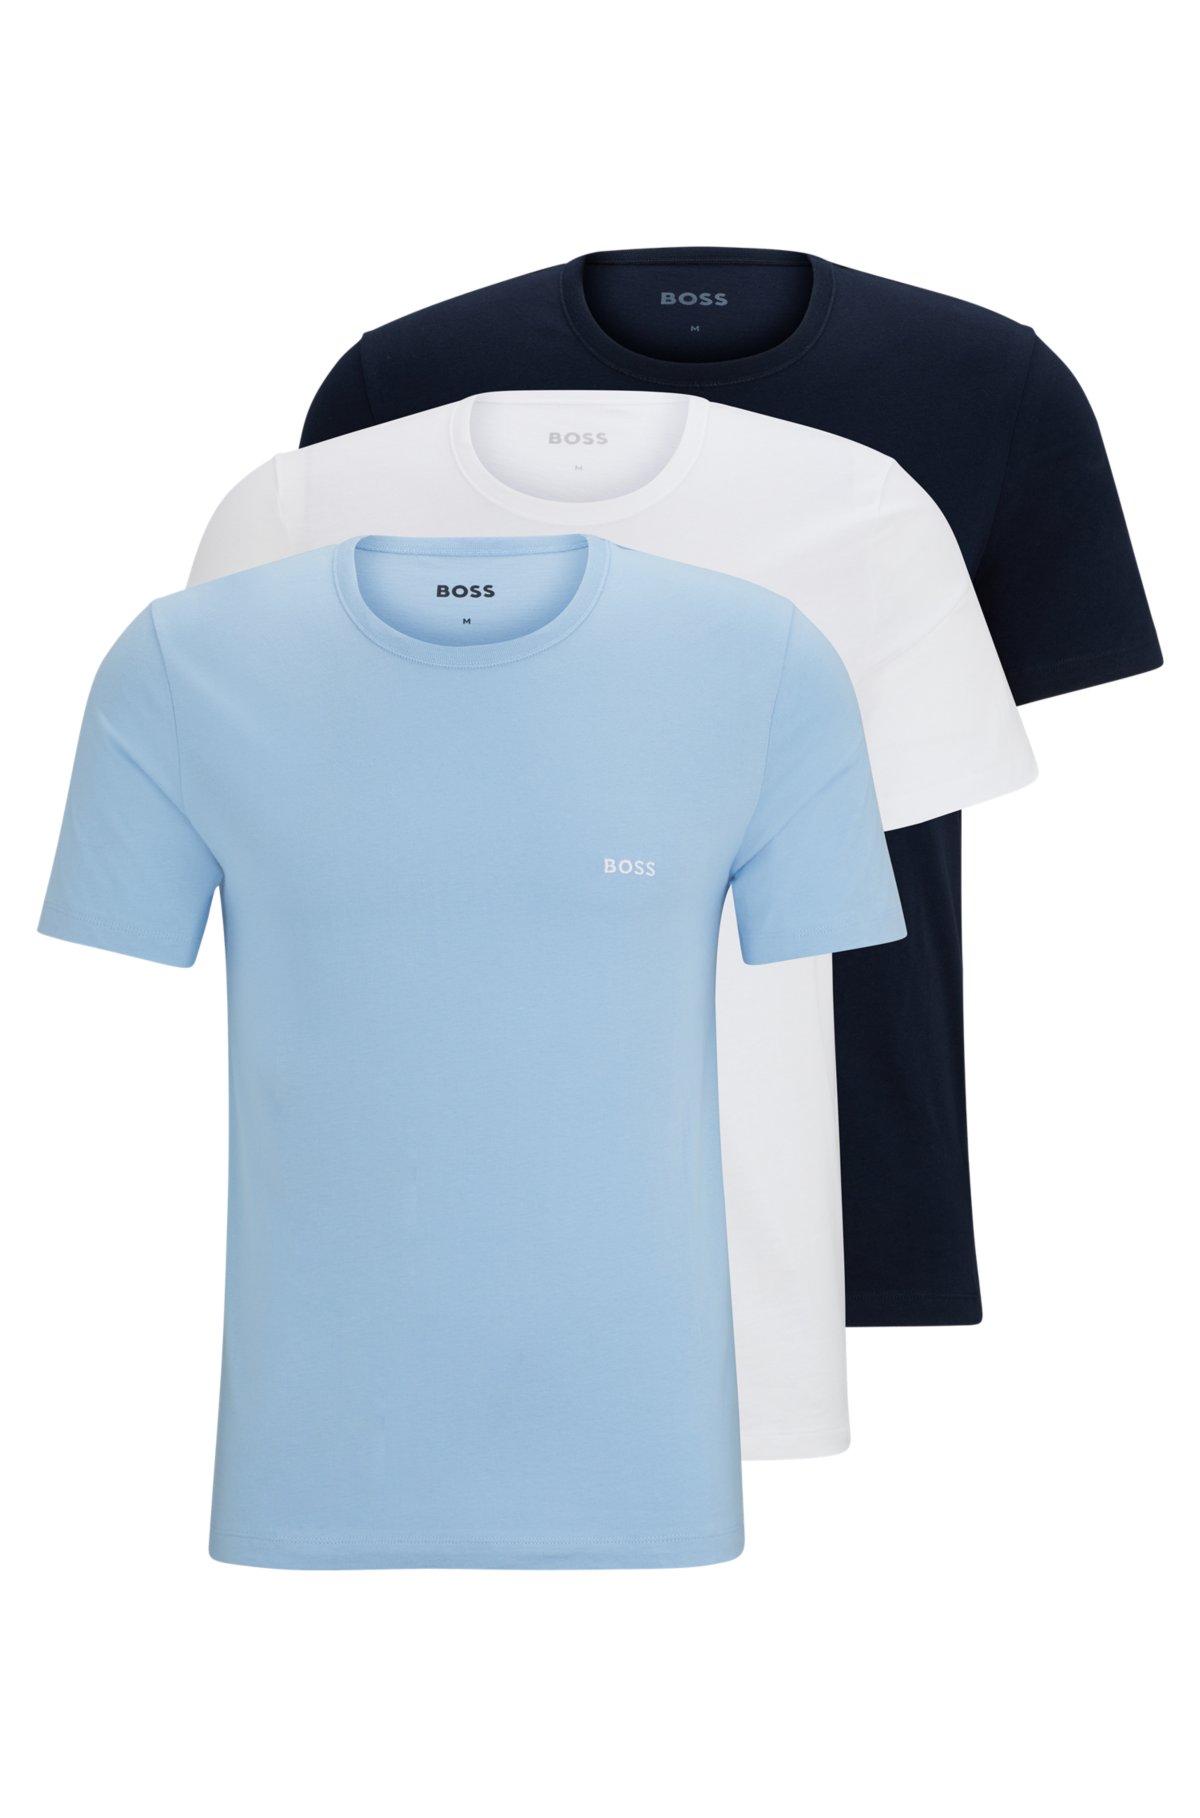 BOSS Pakke med T-shirts til undertøj i bomuldsjersey og logo